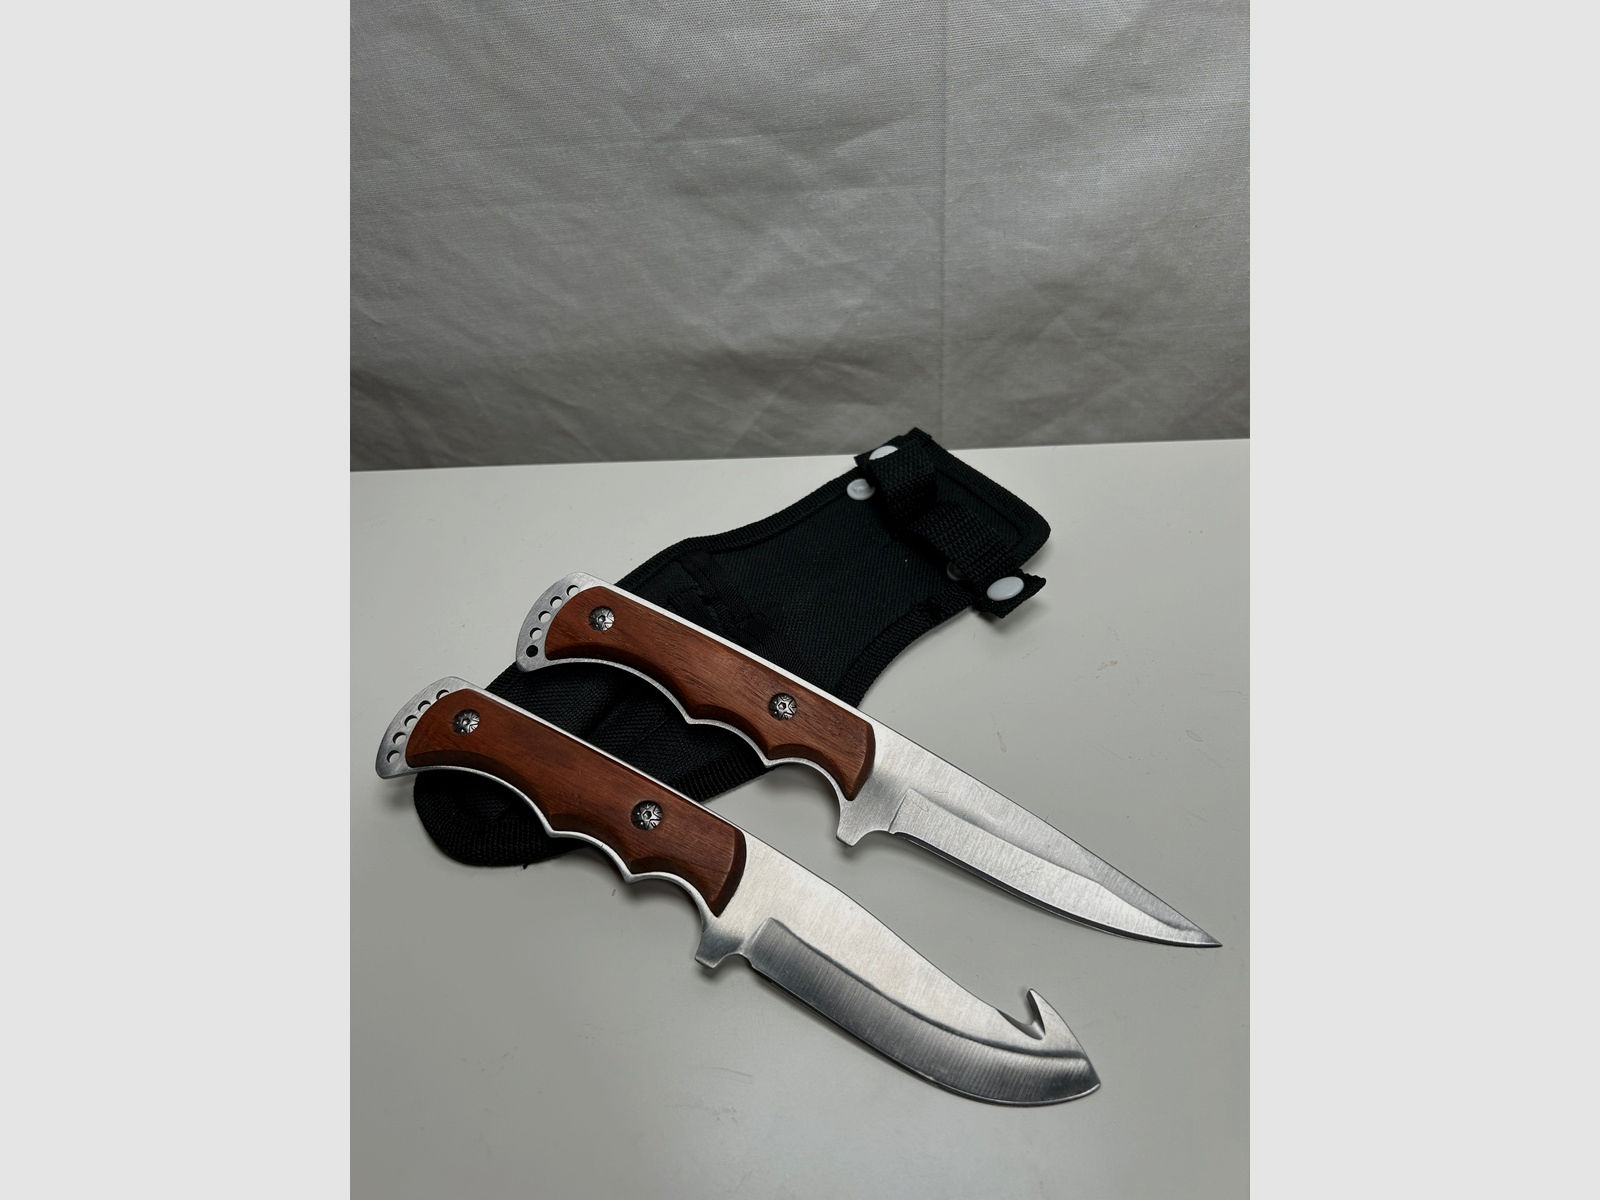 Messer Set mit doppelter Messerscheide (Outdoor/Jagd)